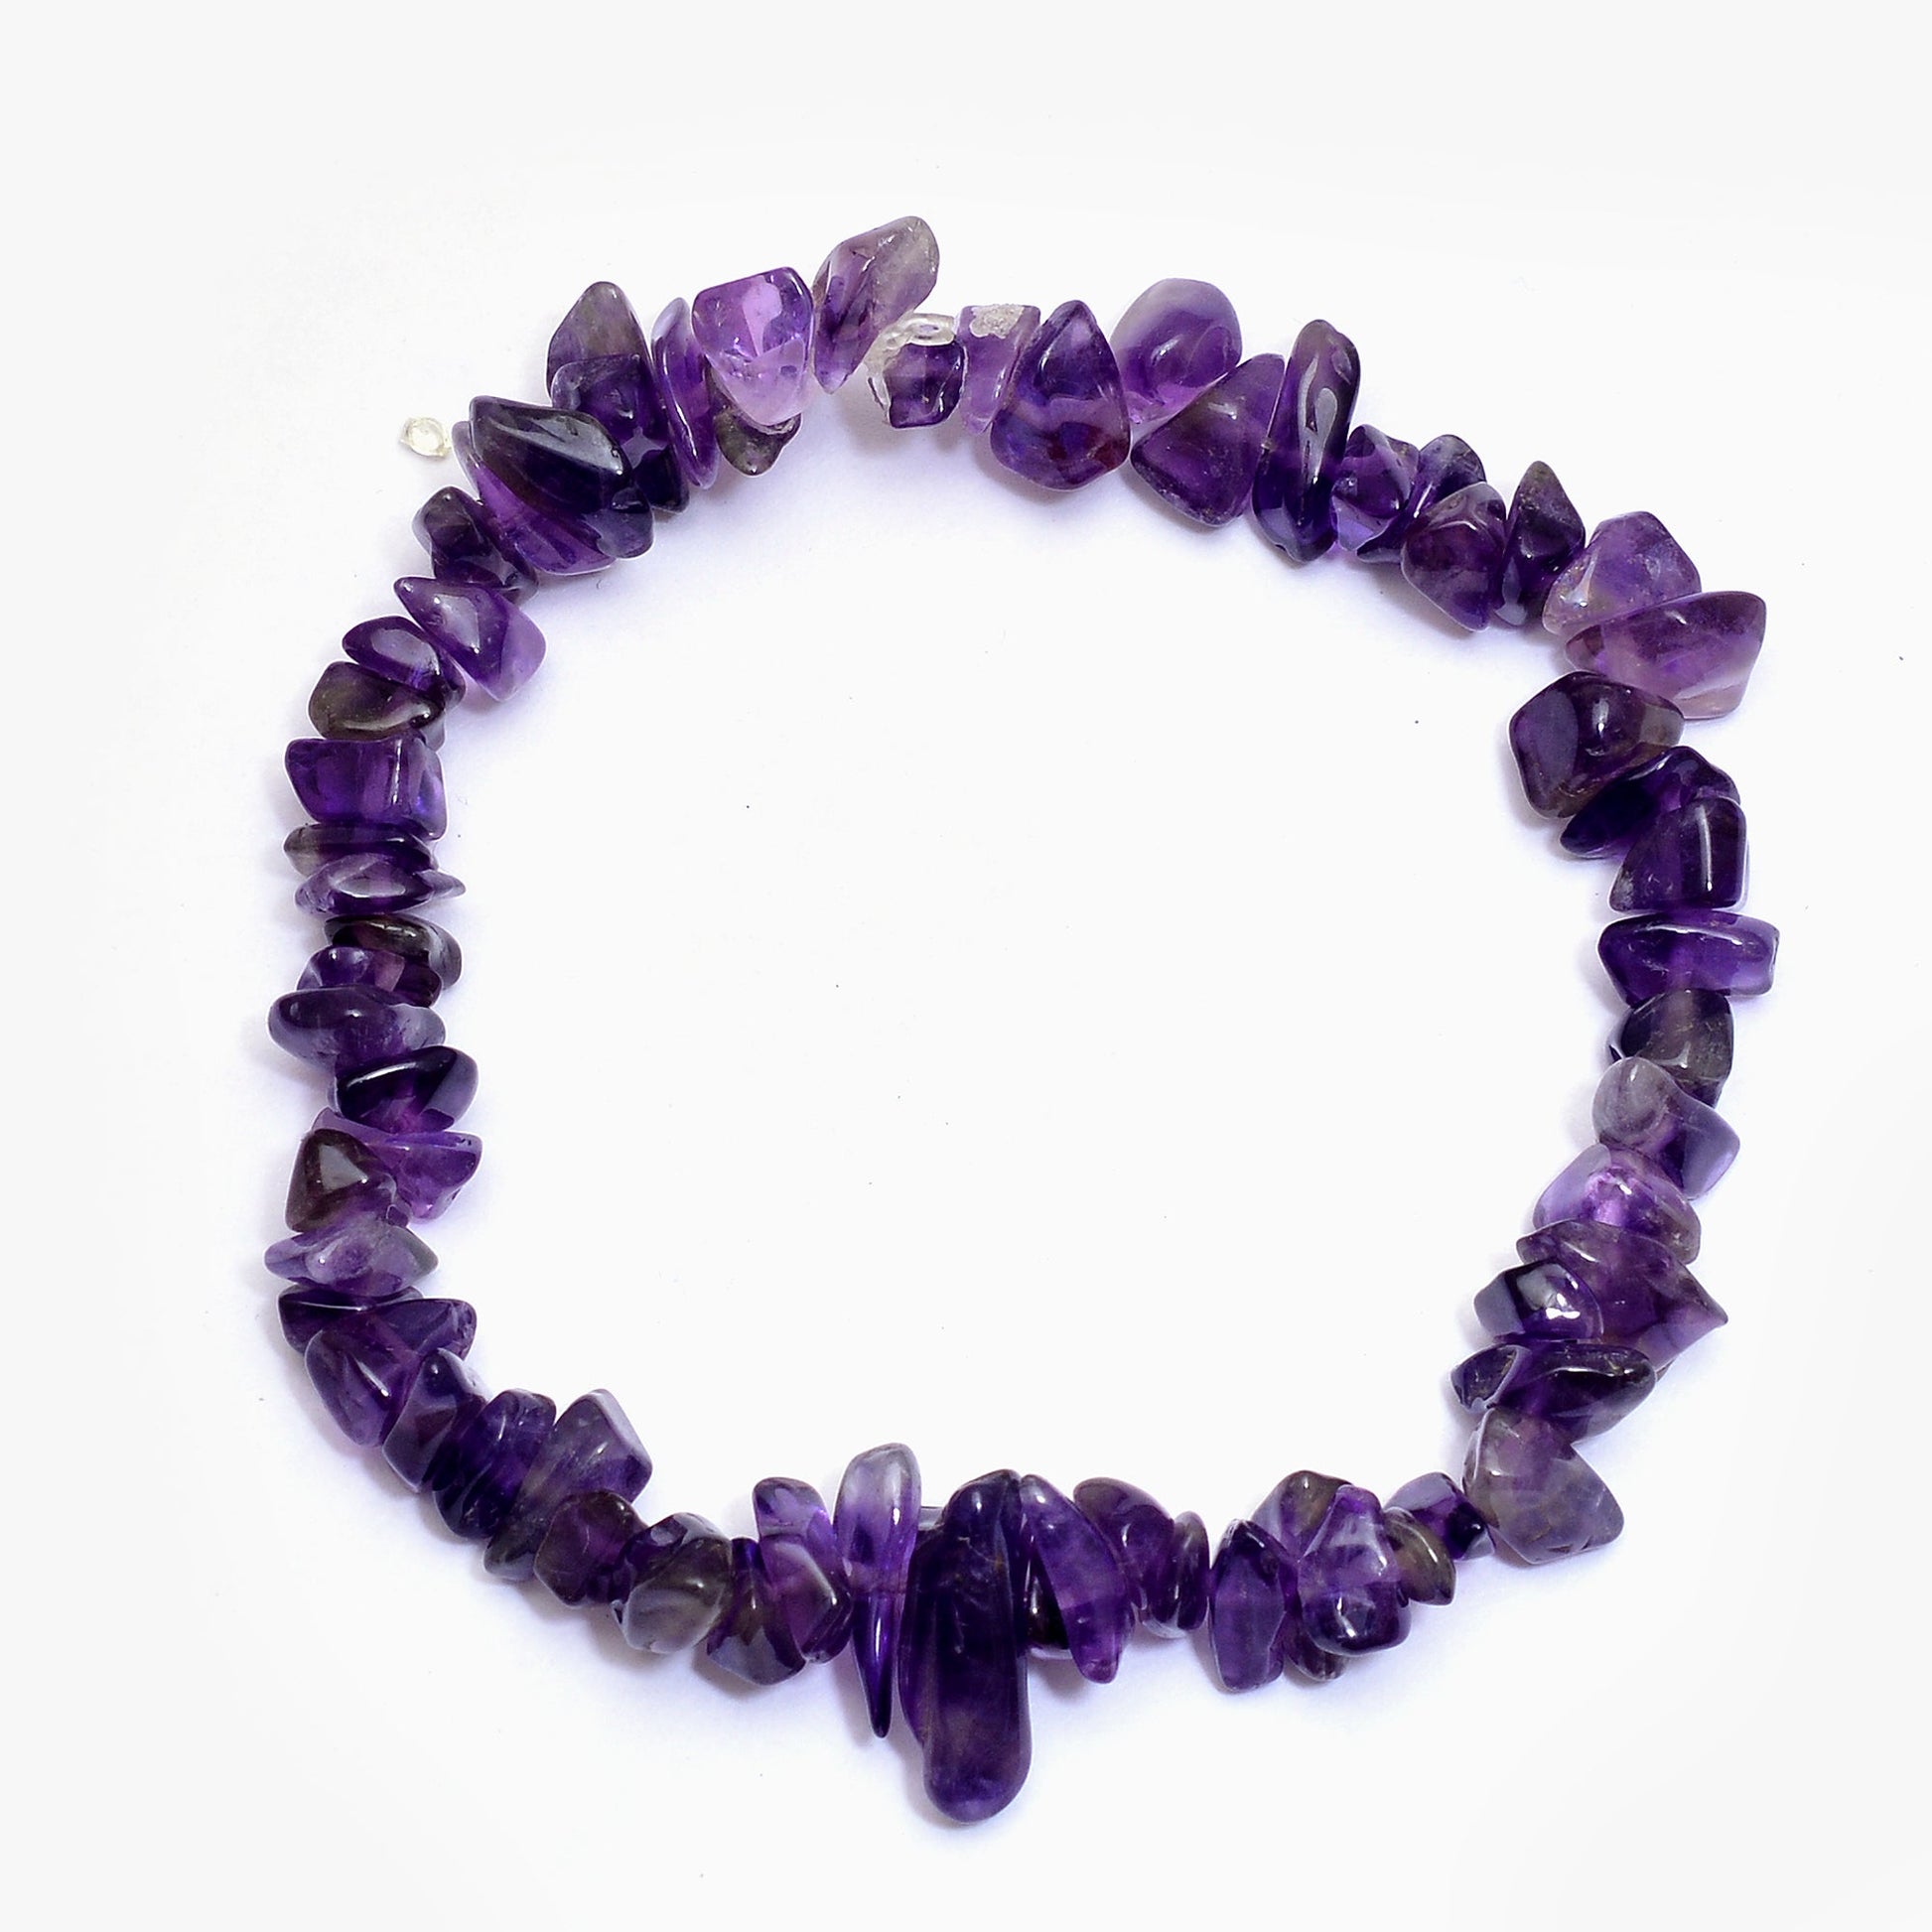 Natural Amethyst Gemstone Stretchable Bracelet - Adorable Jewelry For Women GemsRush